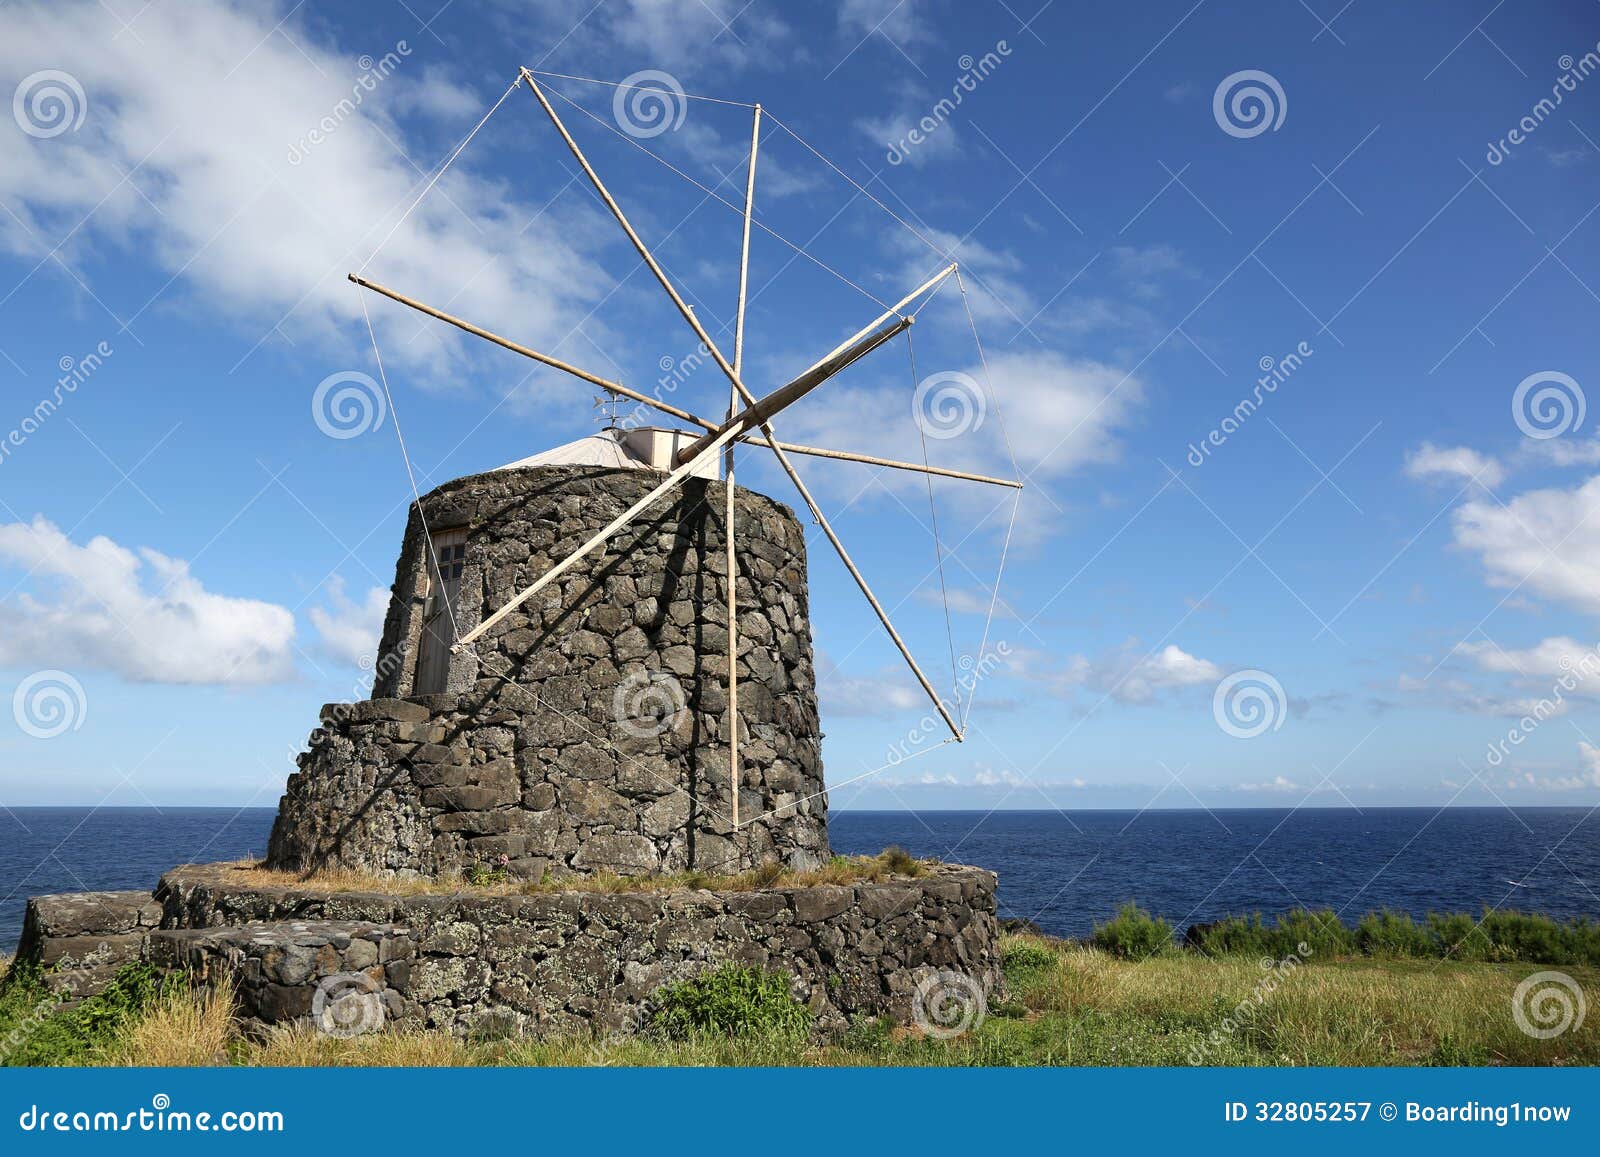 windmill on the island of corvo azores portugal